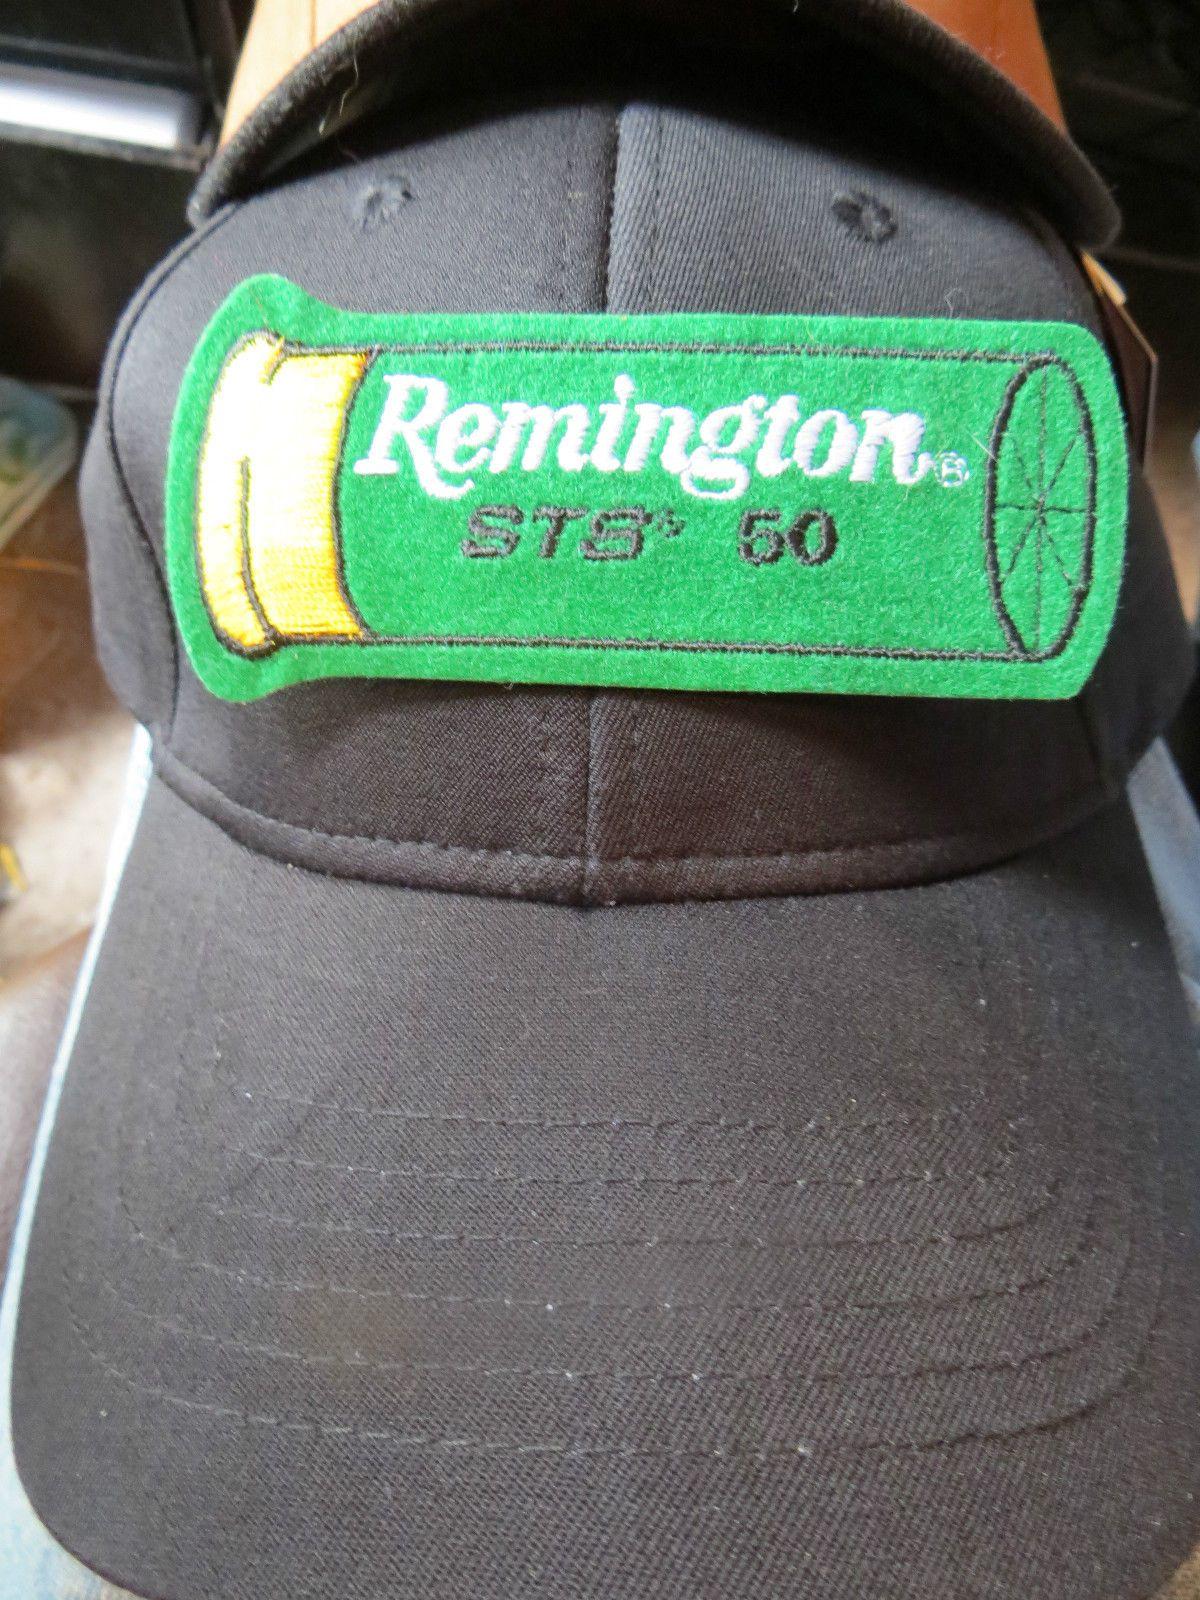 Remington Shotgun Shell Logo - REMINGTON STS 6O SHOTGUN SHELL SHAPE LOGO ADVERTISING PATCH ON ...